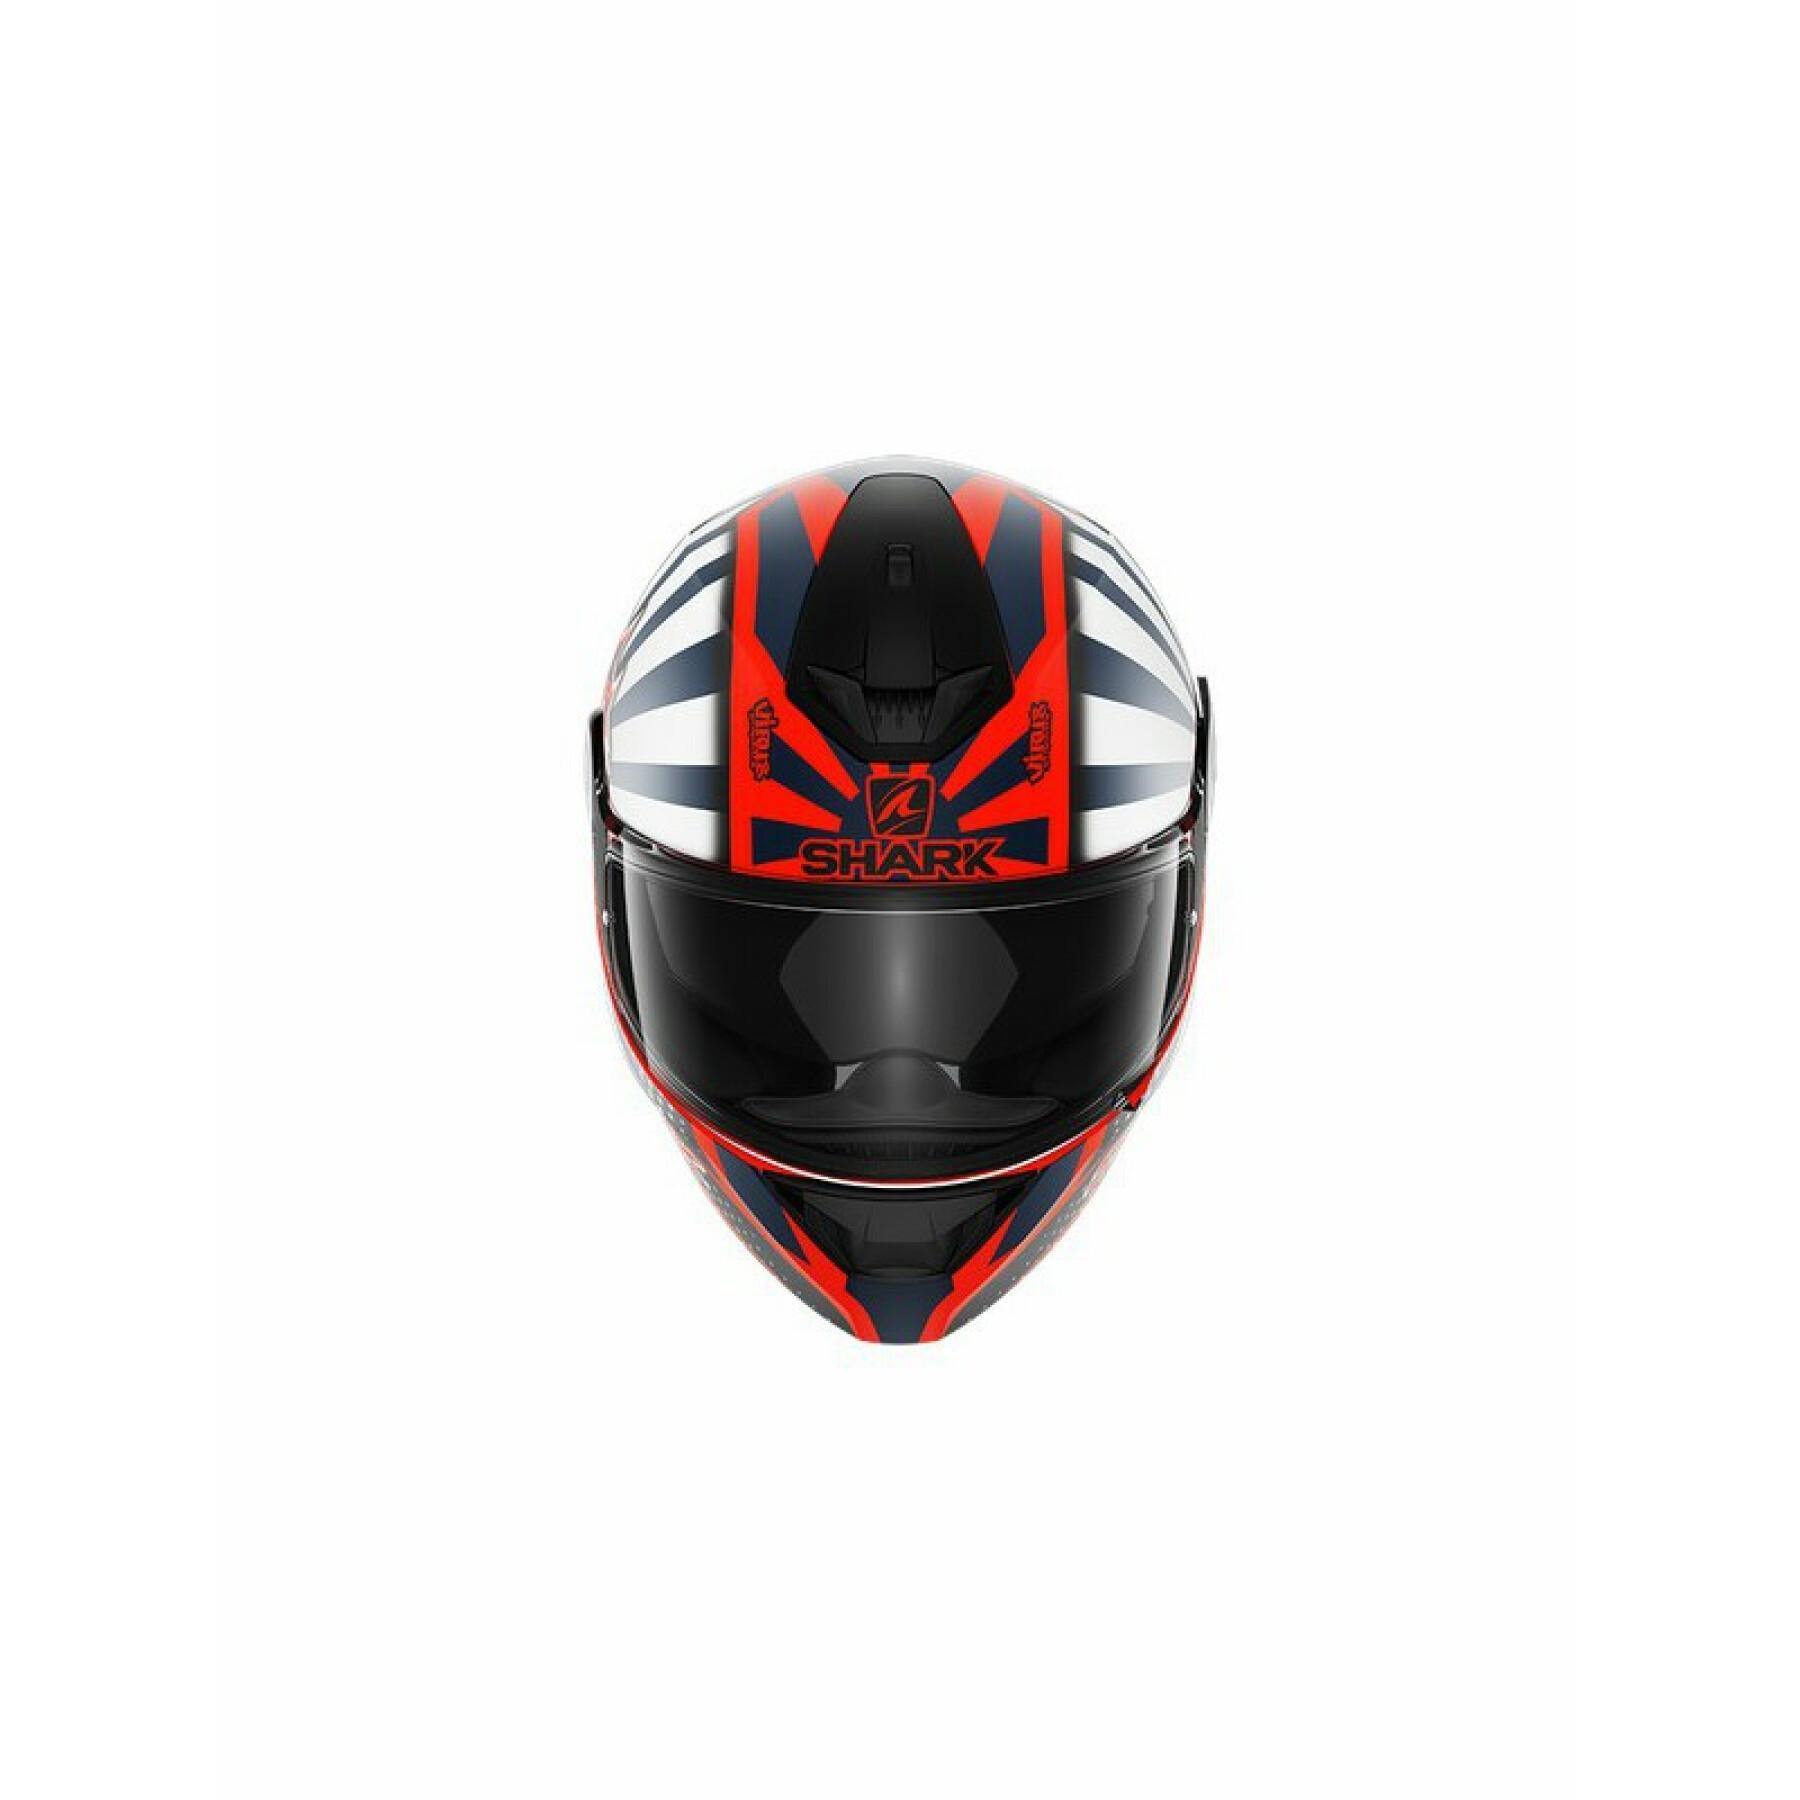 Full face motorcycle helmet Shark d-skwal 2 zarco 2019